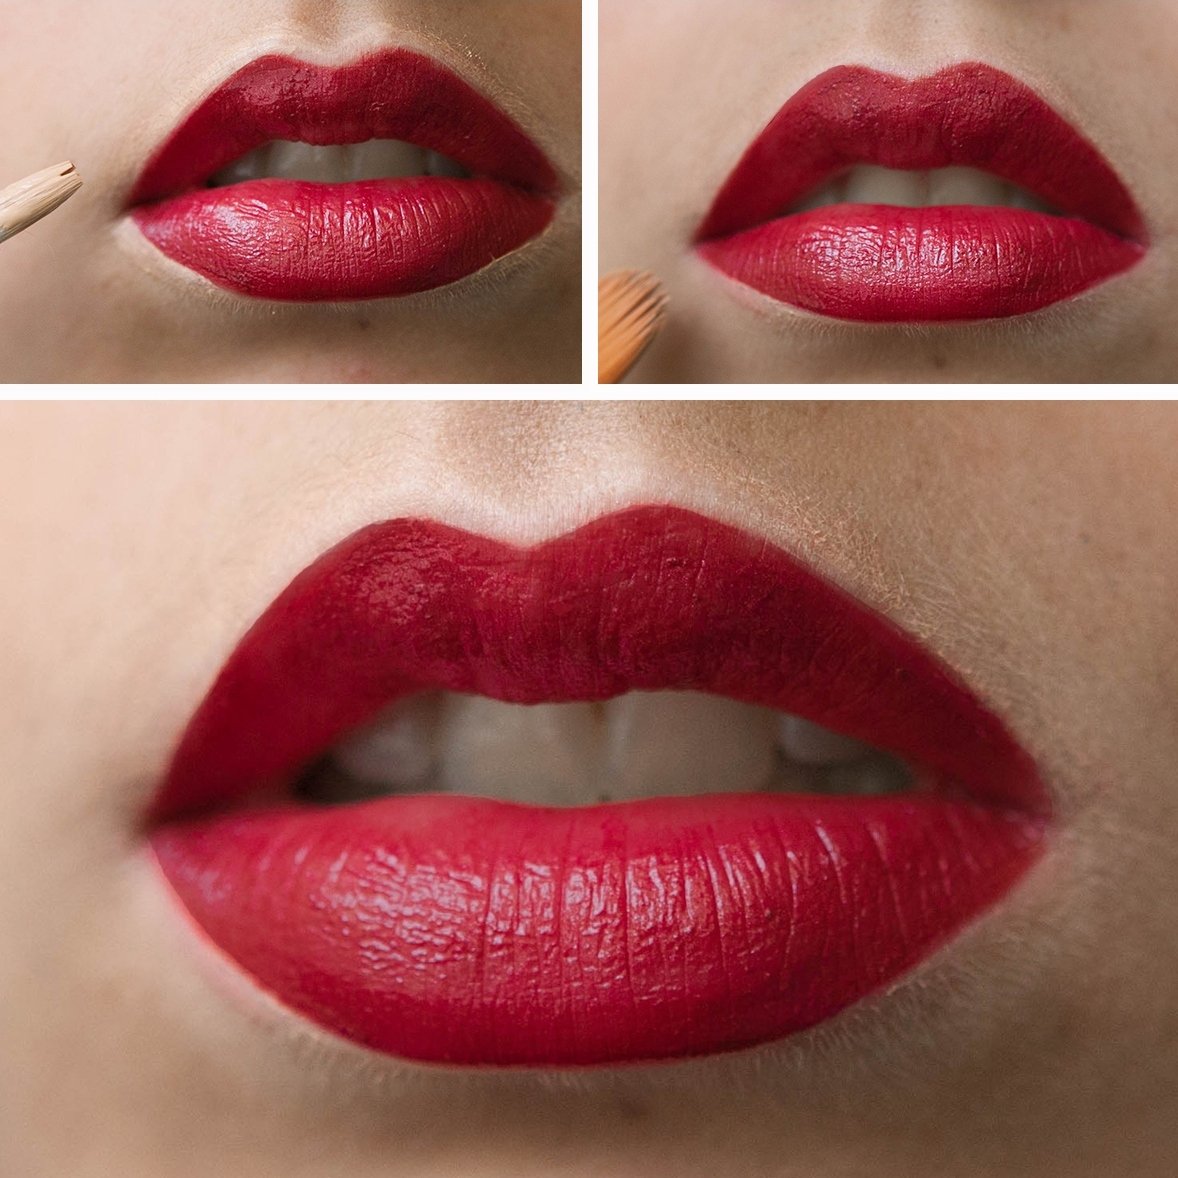 Guby. Накрашенные губы. Макияж губ. Красивый макияж губ. Губы накрашенные красной помадой.